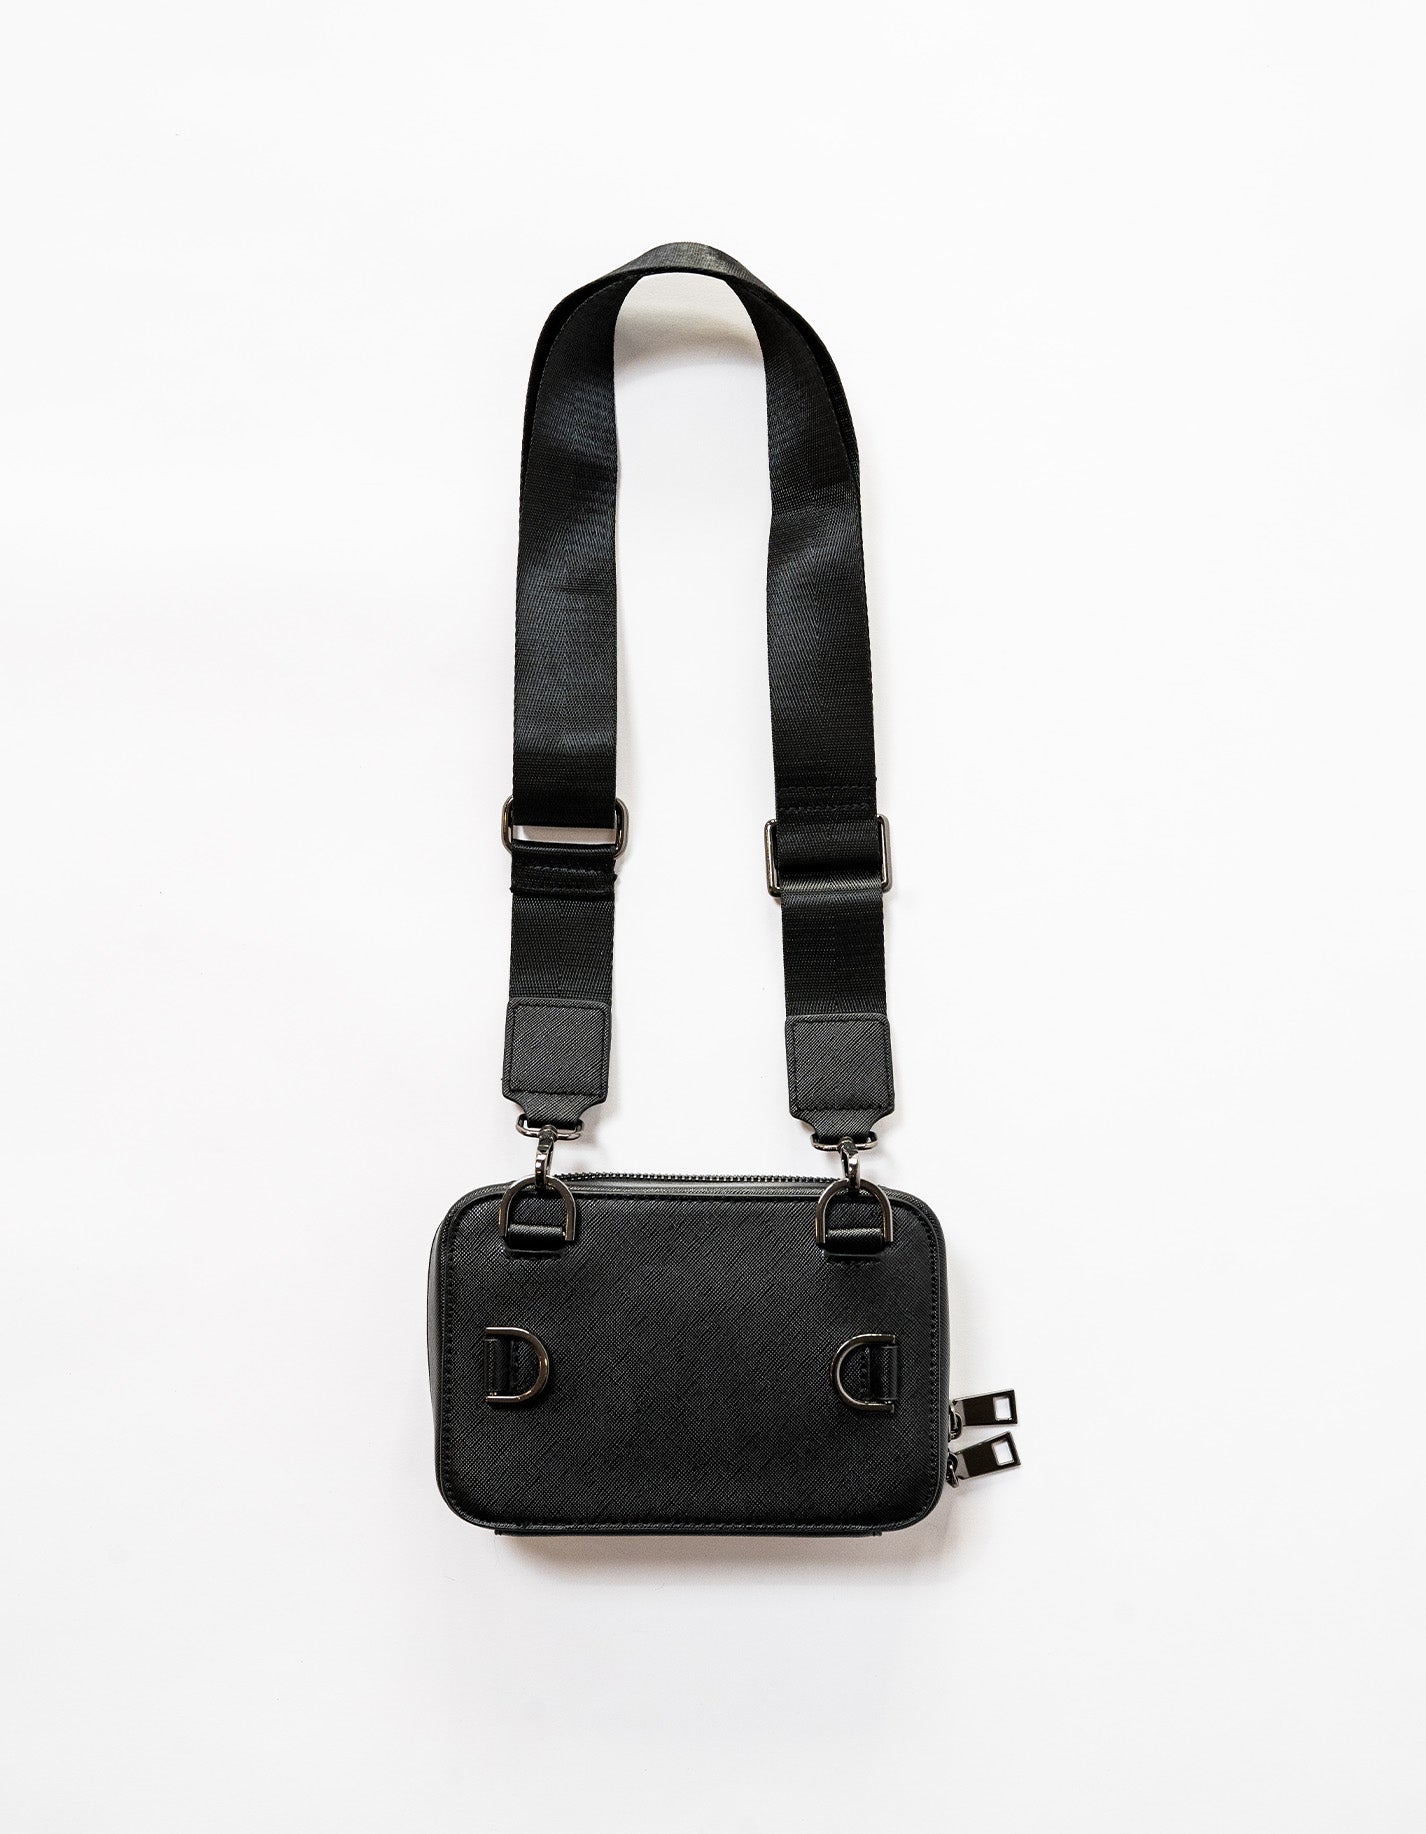 Back view of black Shoulder Bag with moutn options